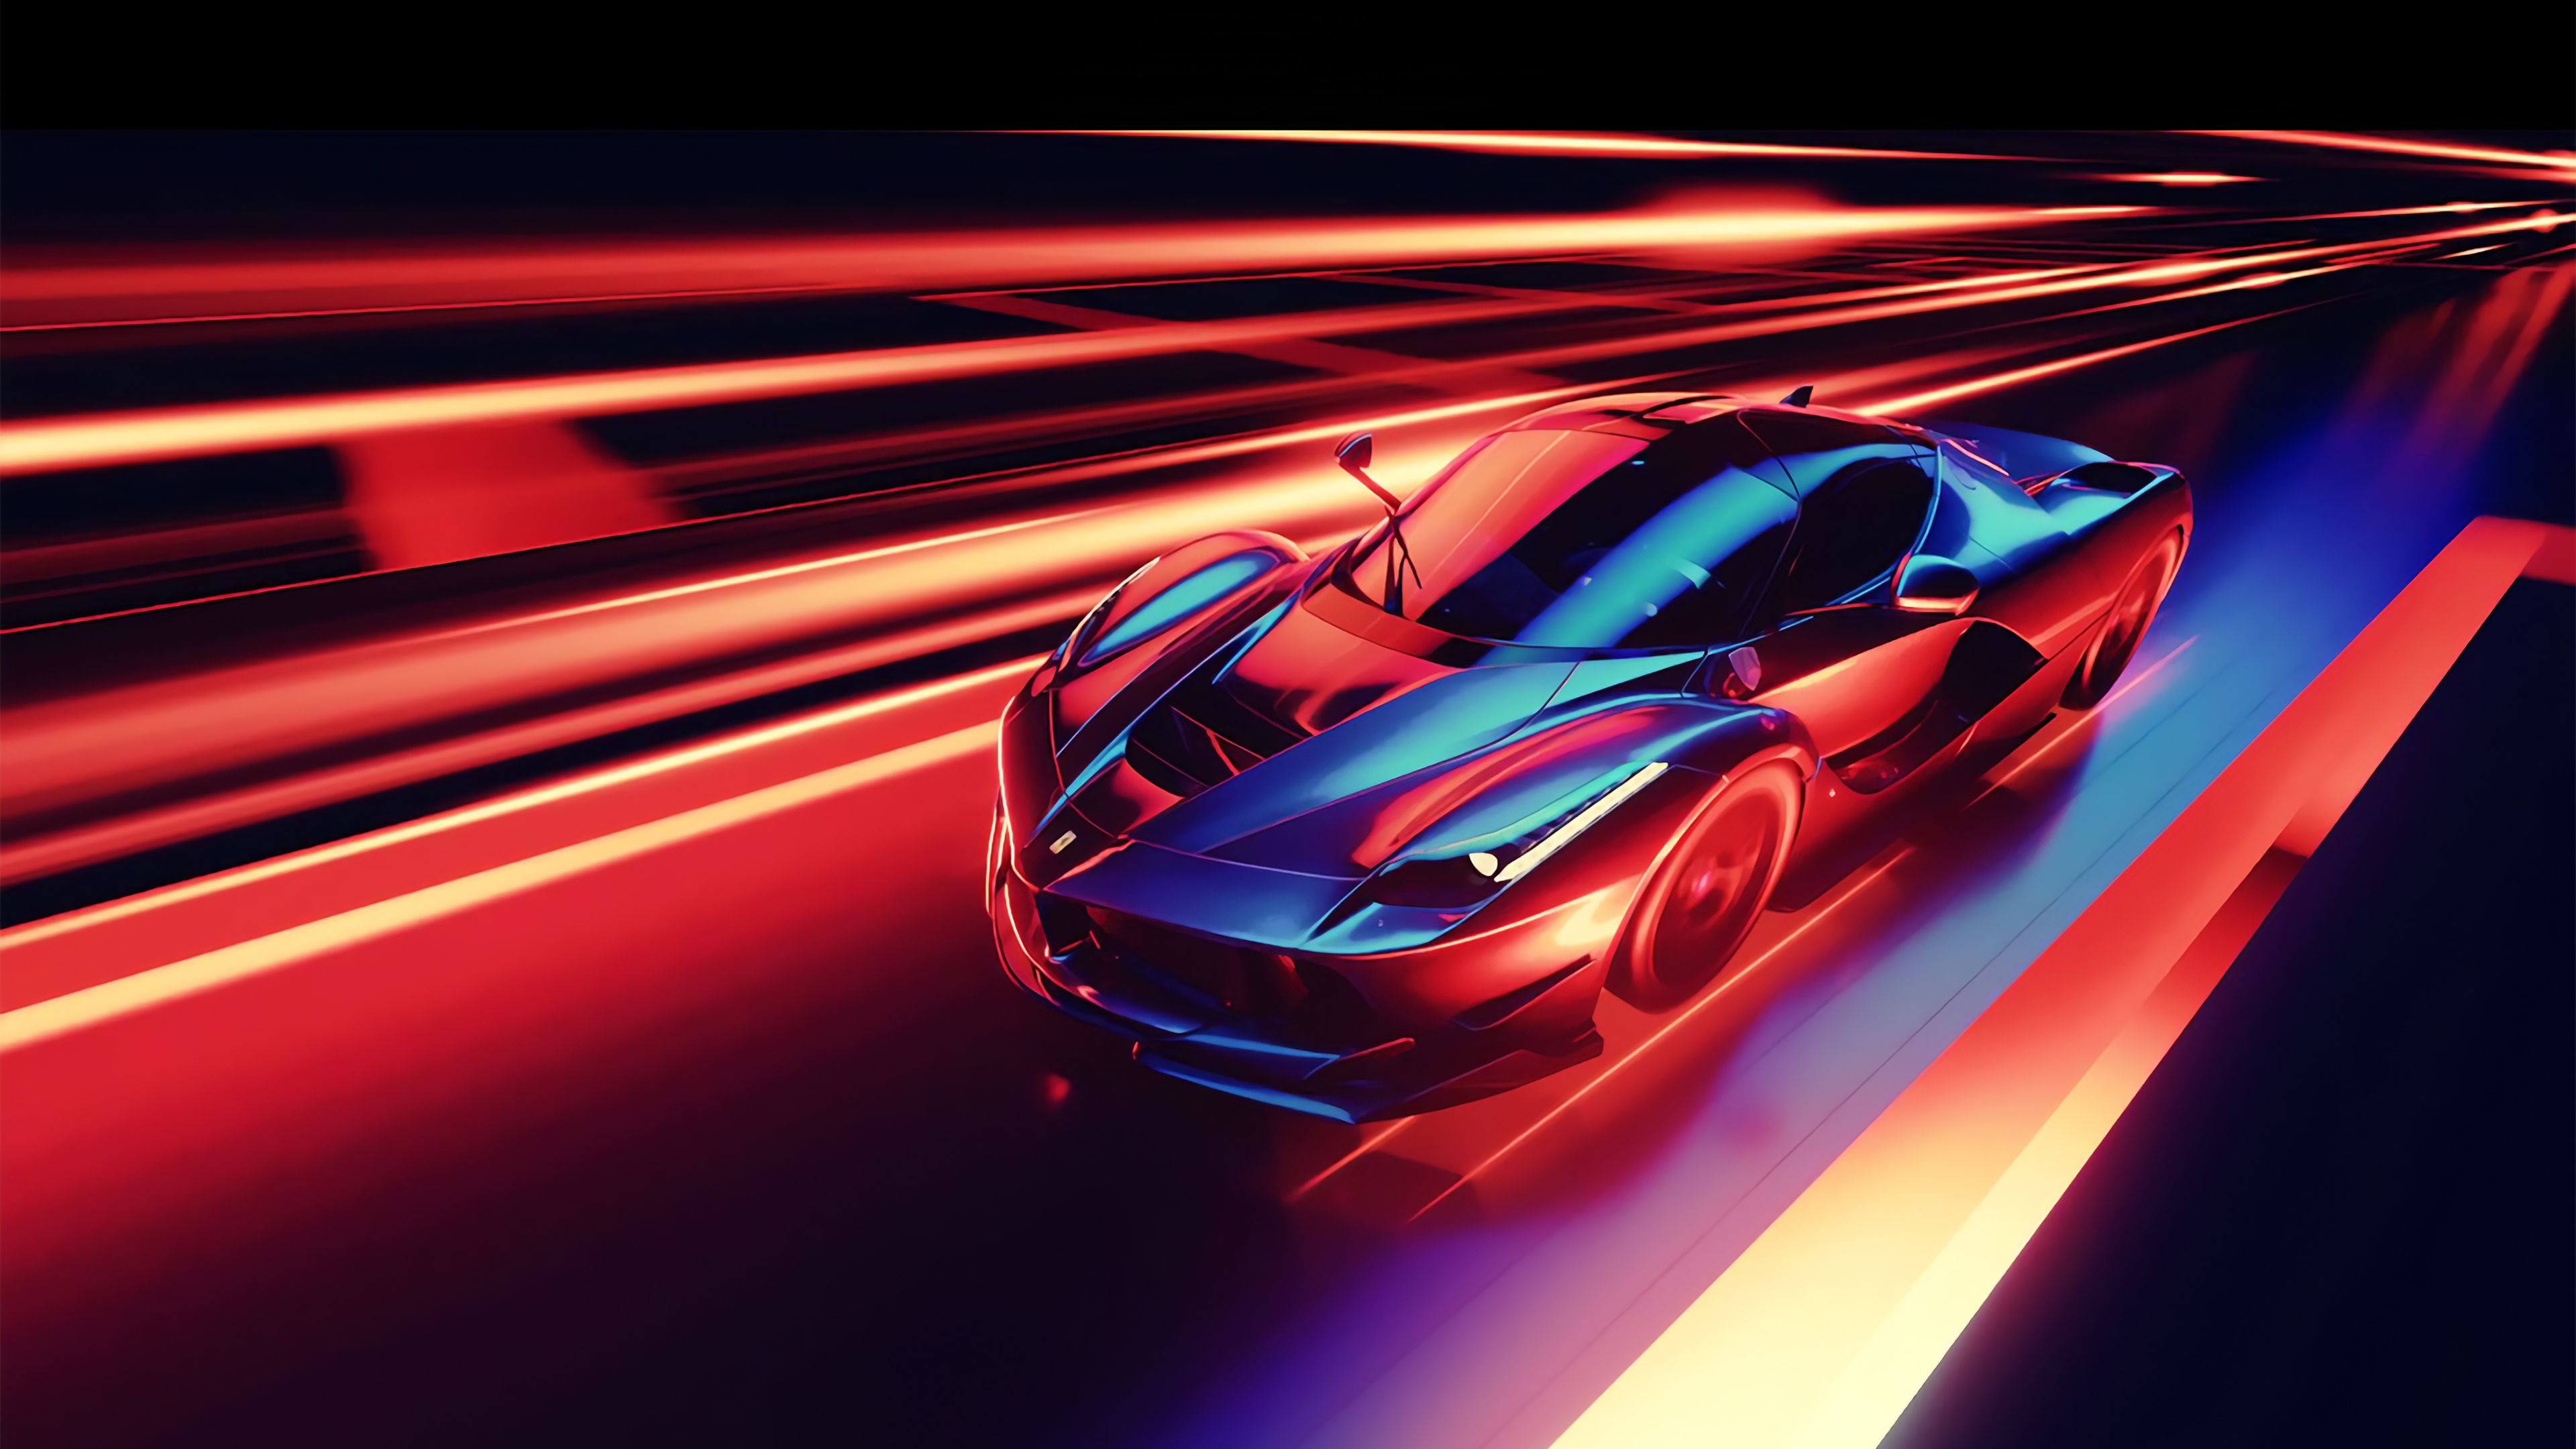 Ferrari Digital Art 4k, HD Cars, 4k Wallpaper, Image, Background, Photo and Picture